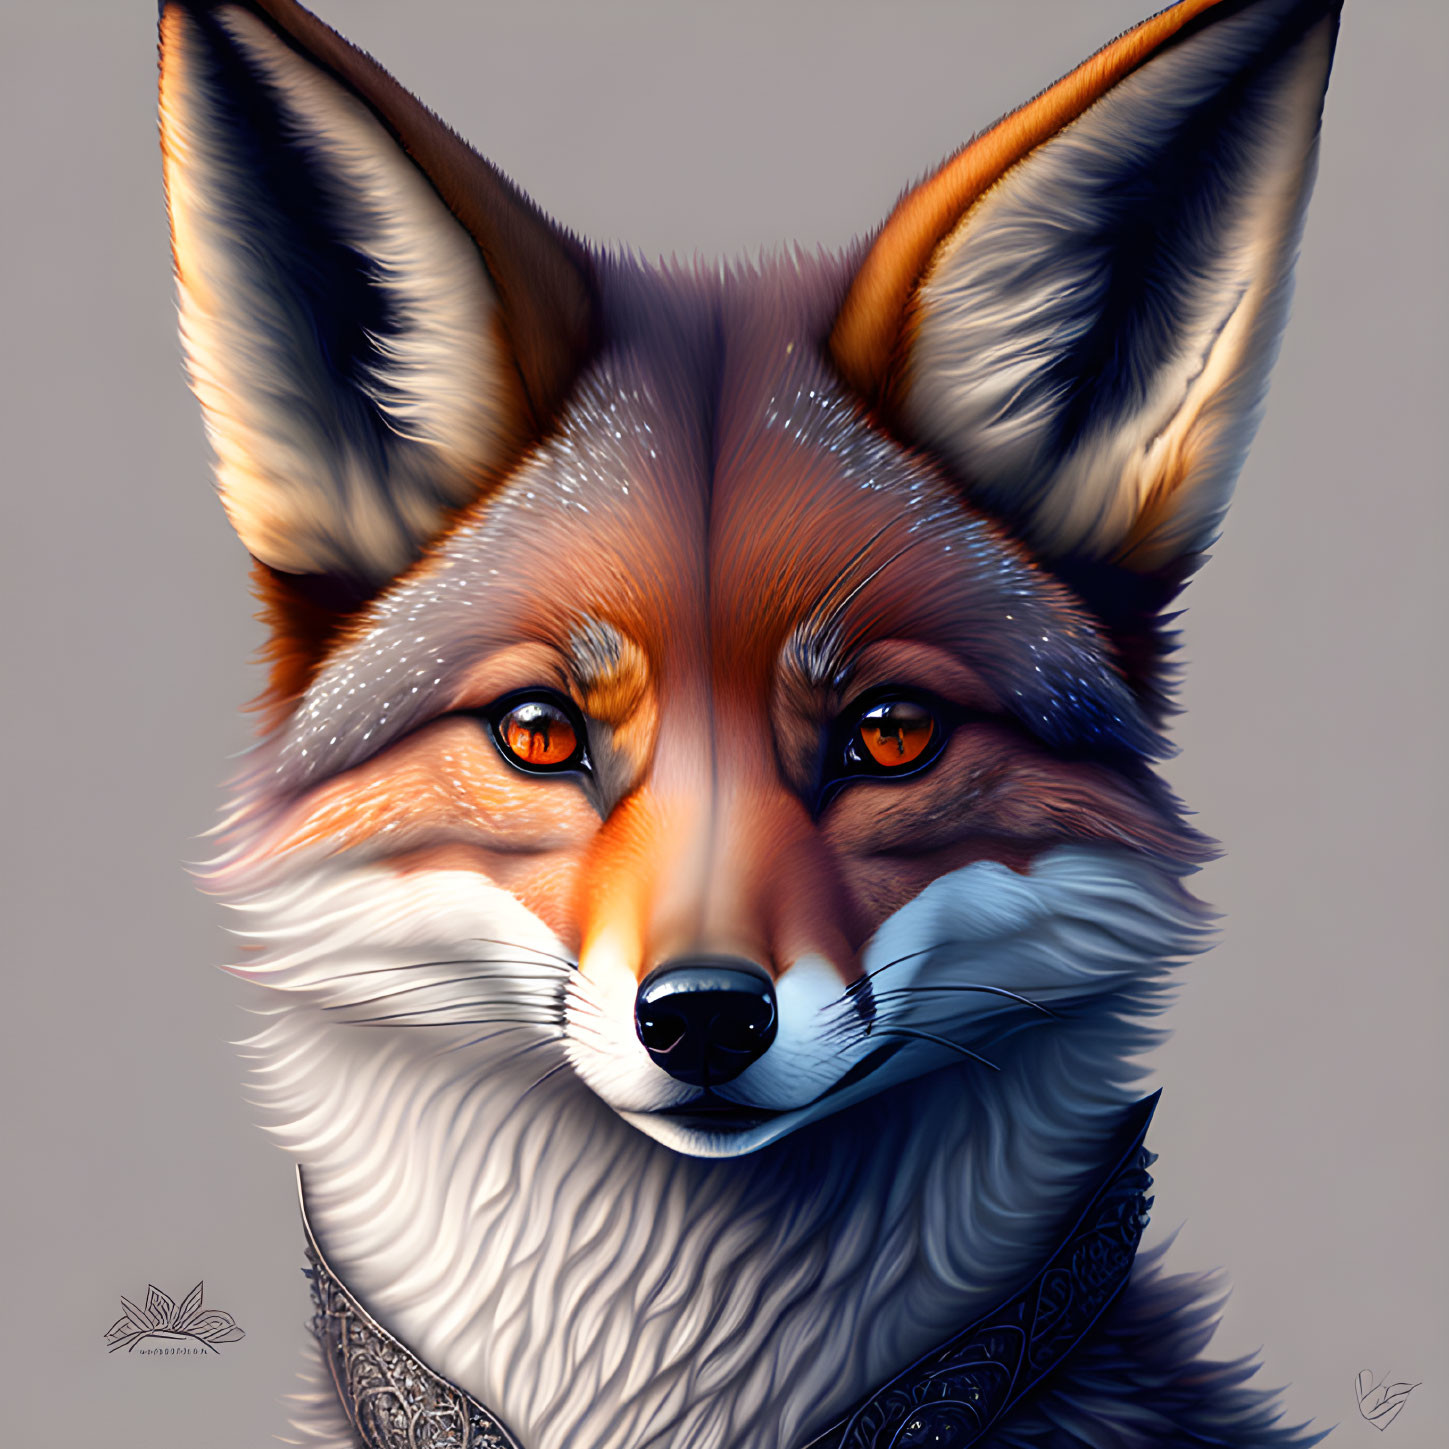 Detailed Fox Illustration with Orange Eyes and Bandana: Realistic Fur Texture and Shading